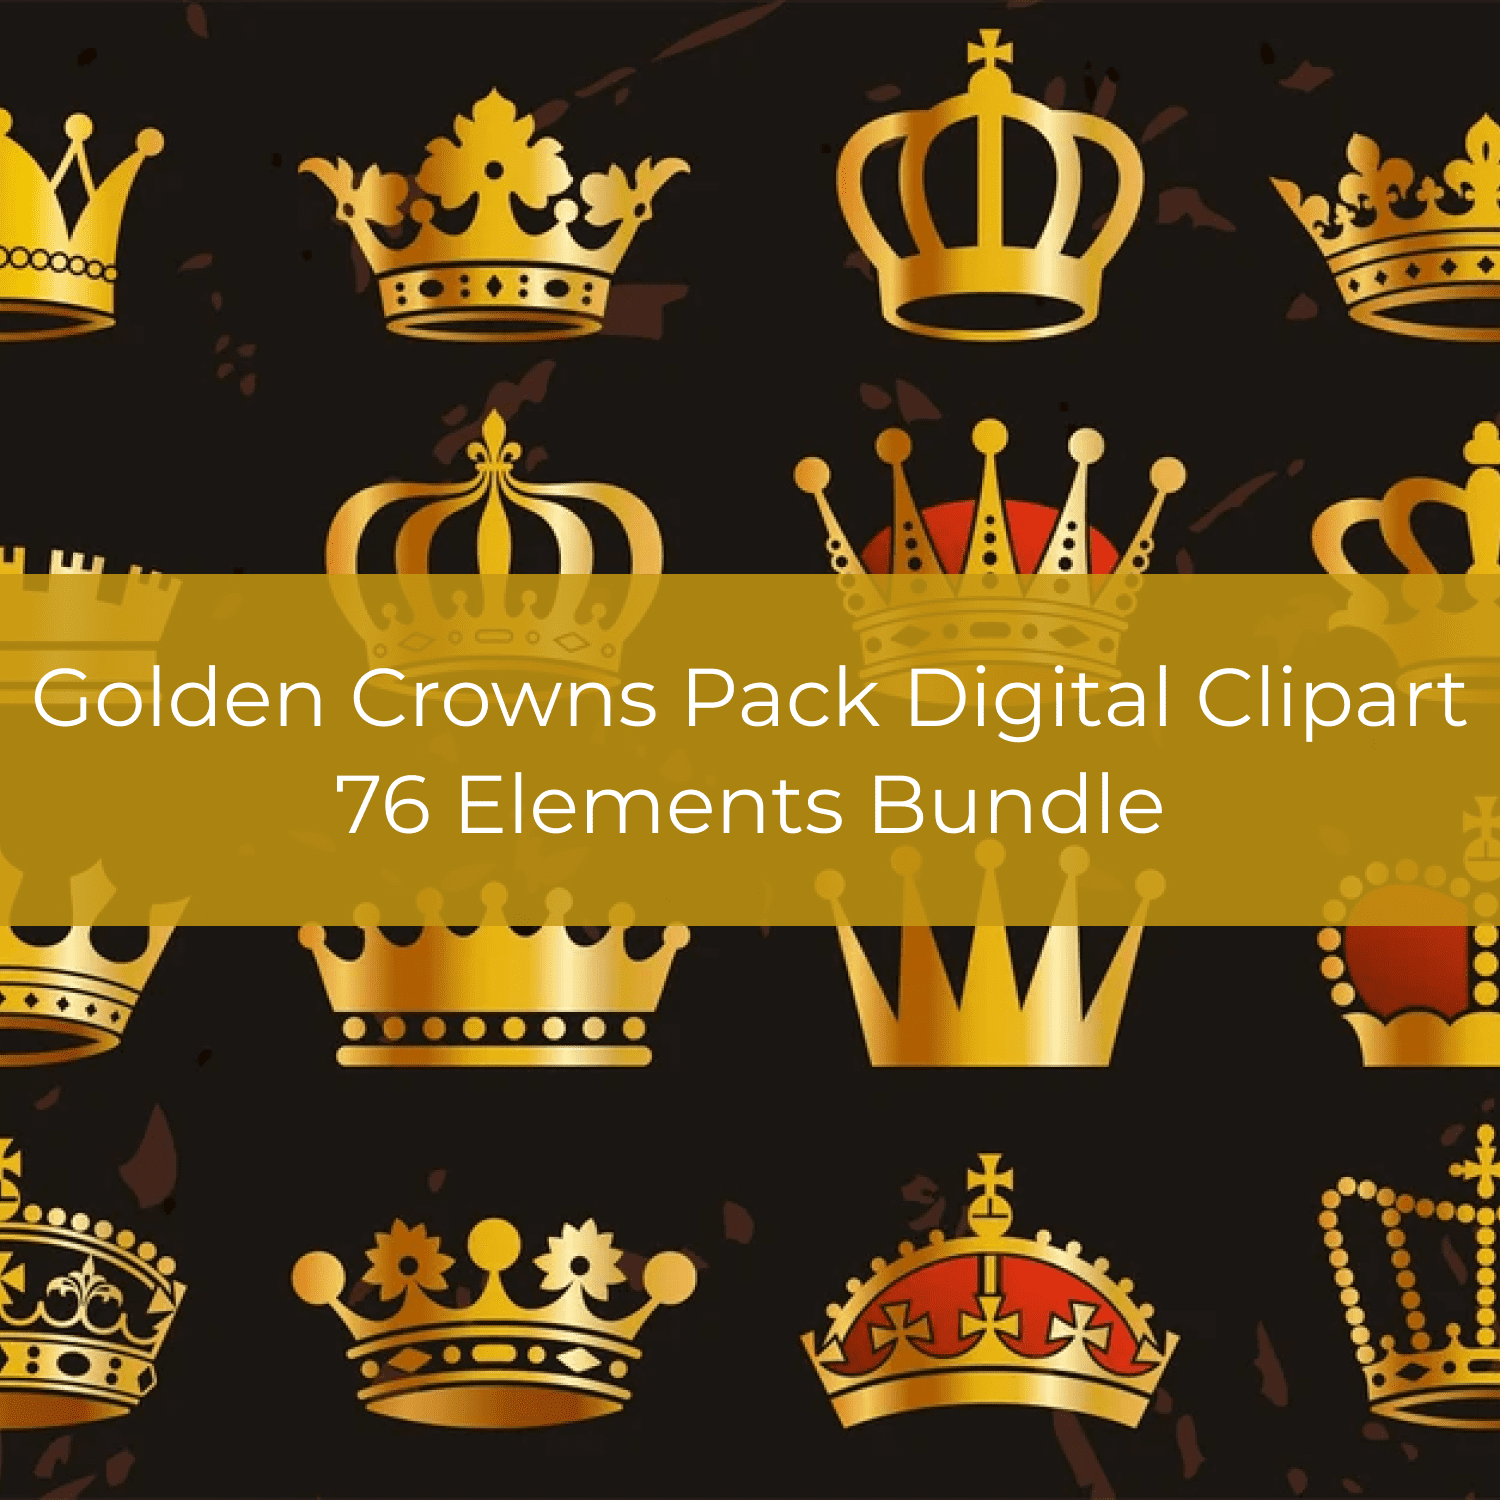 Golden Crowns Pack Digital Clipart, 76 Elements Bundle image.